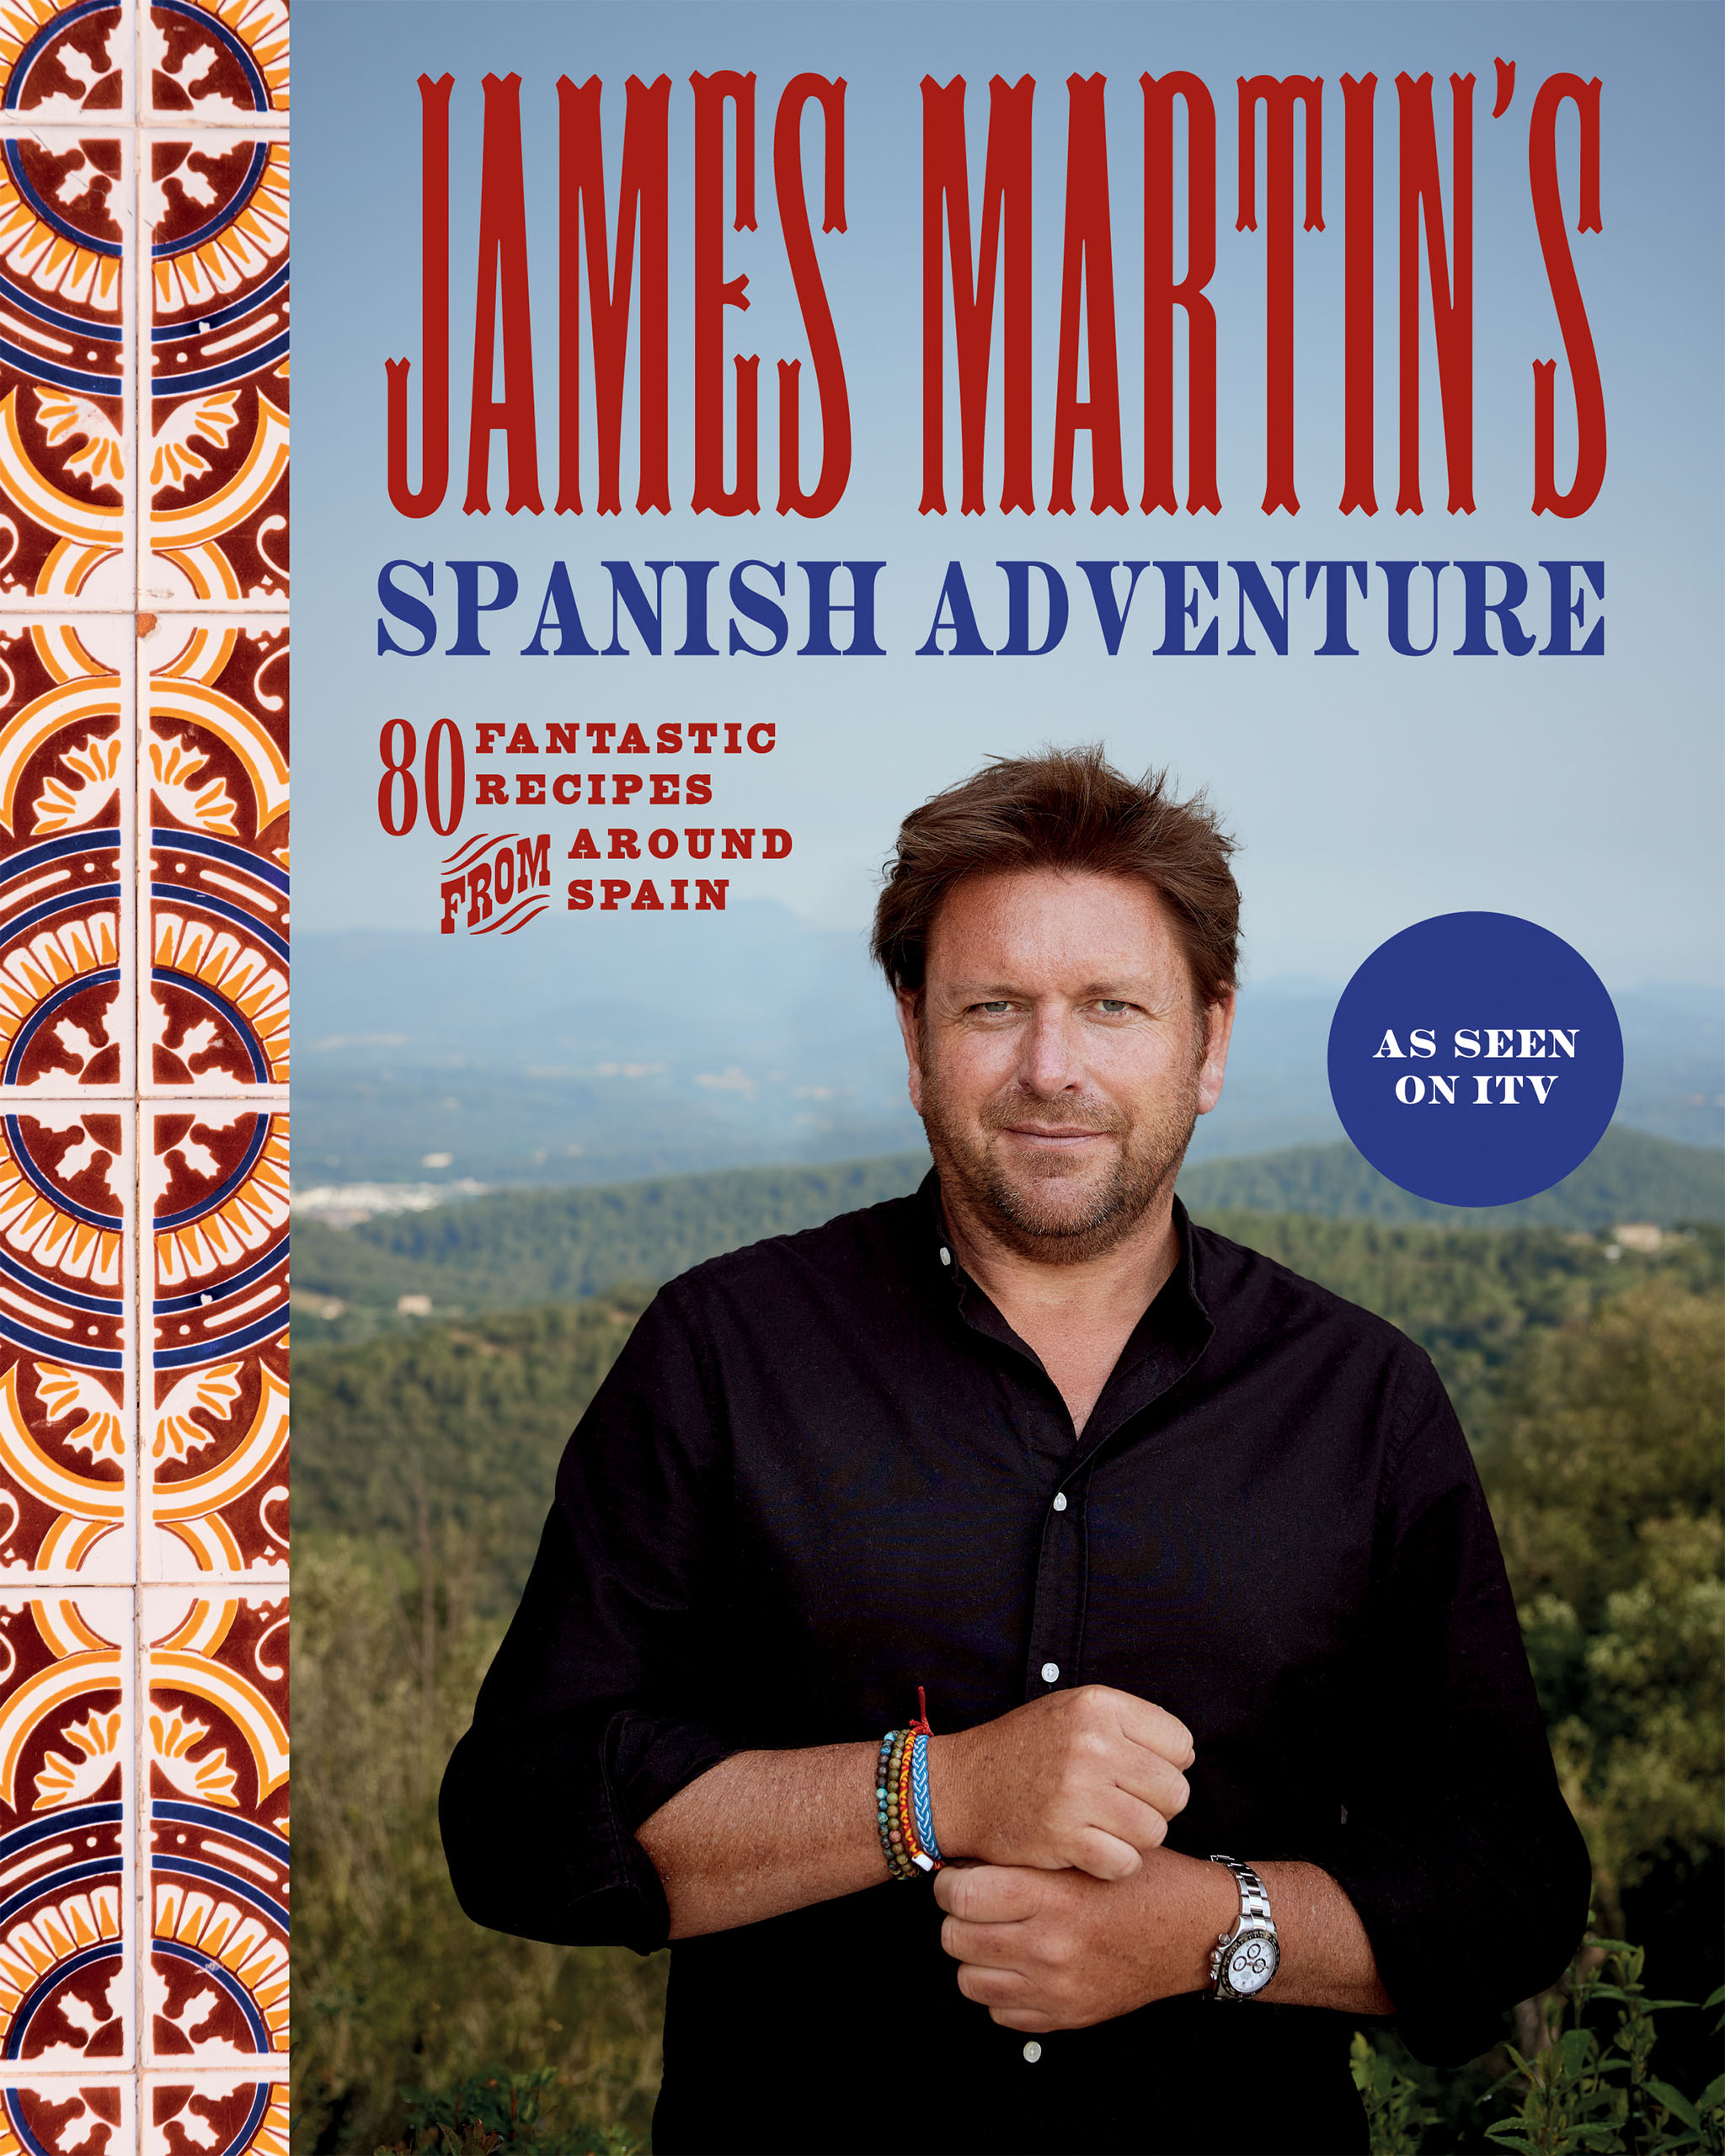 James Martin's Spanish Adventure